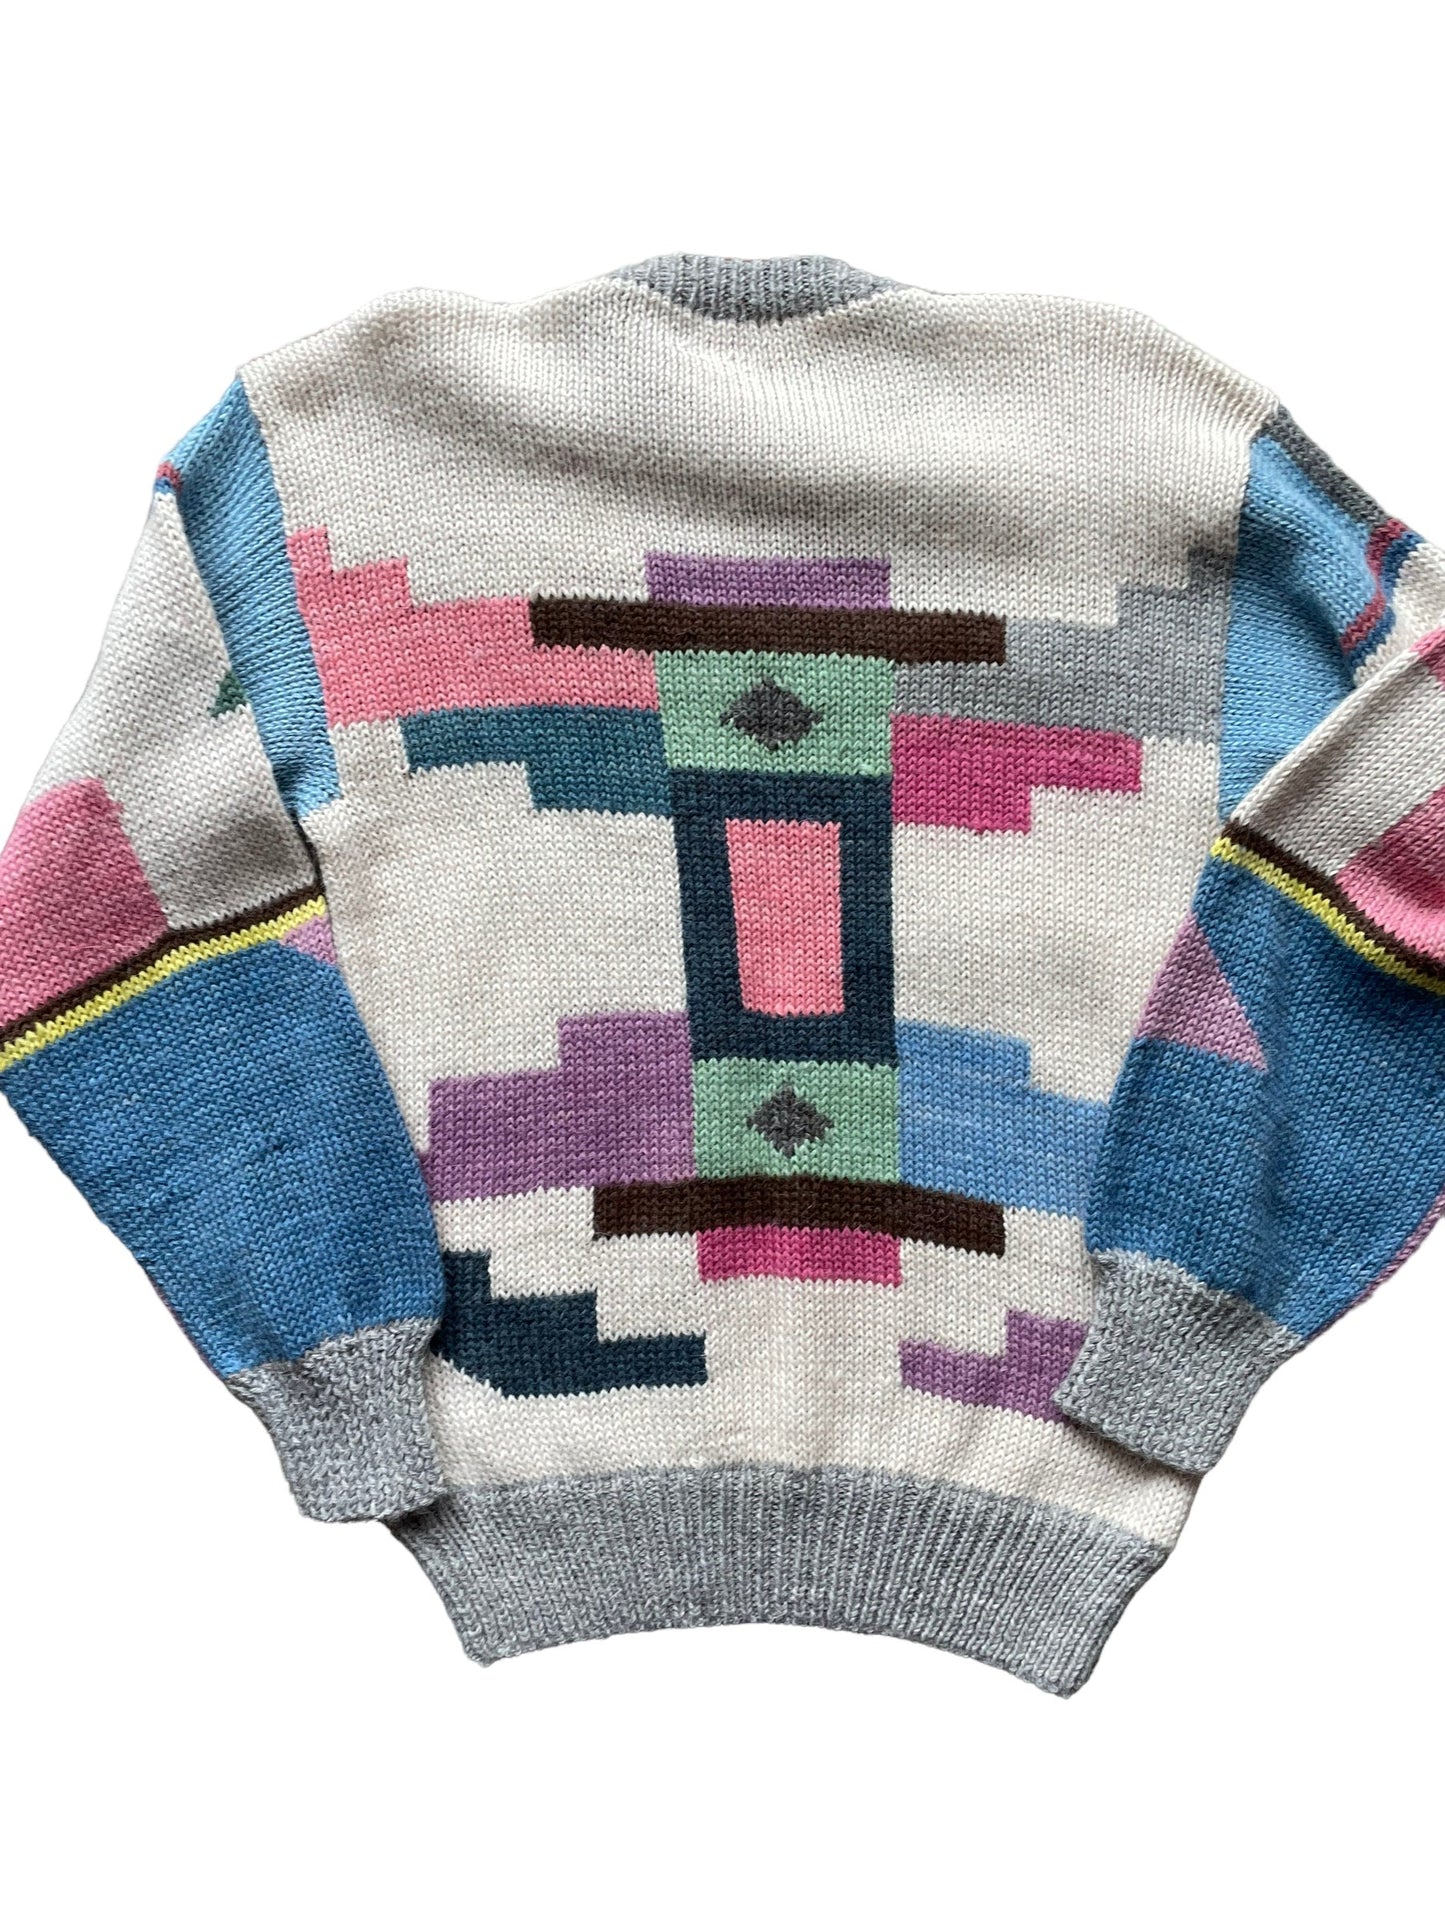 Full back view of Vintage 1980s Geometric Wool Sweater SZ L | Barn Owl Sweaters | Seattle Vintage